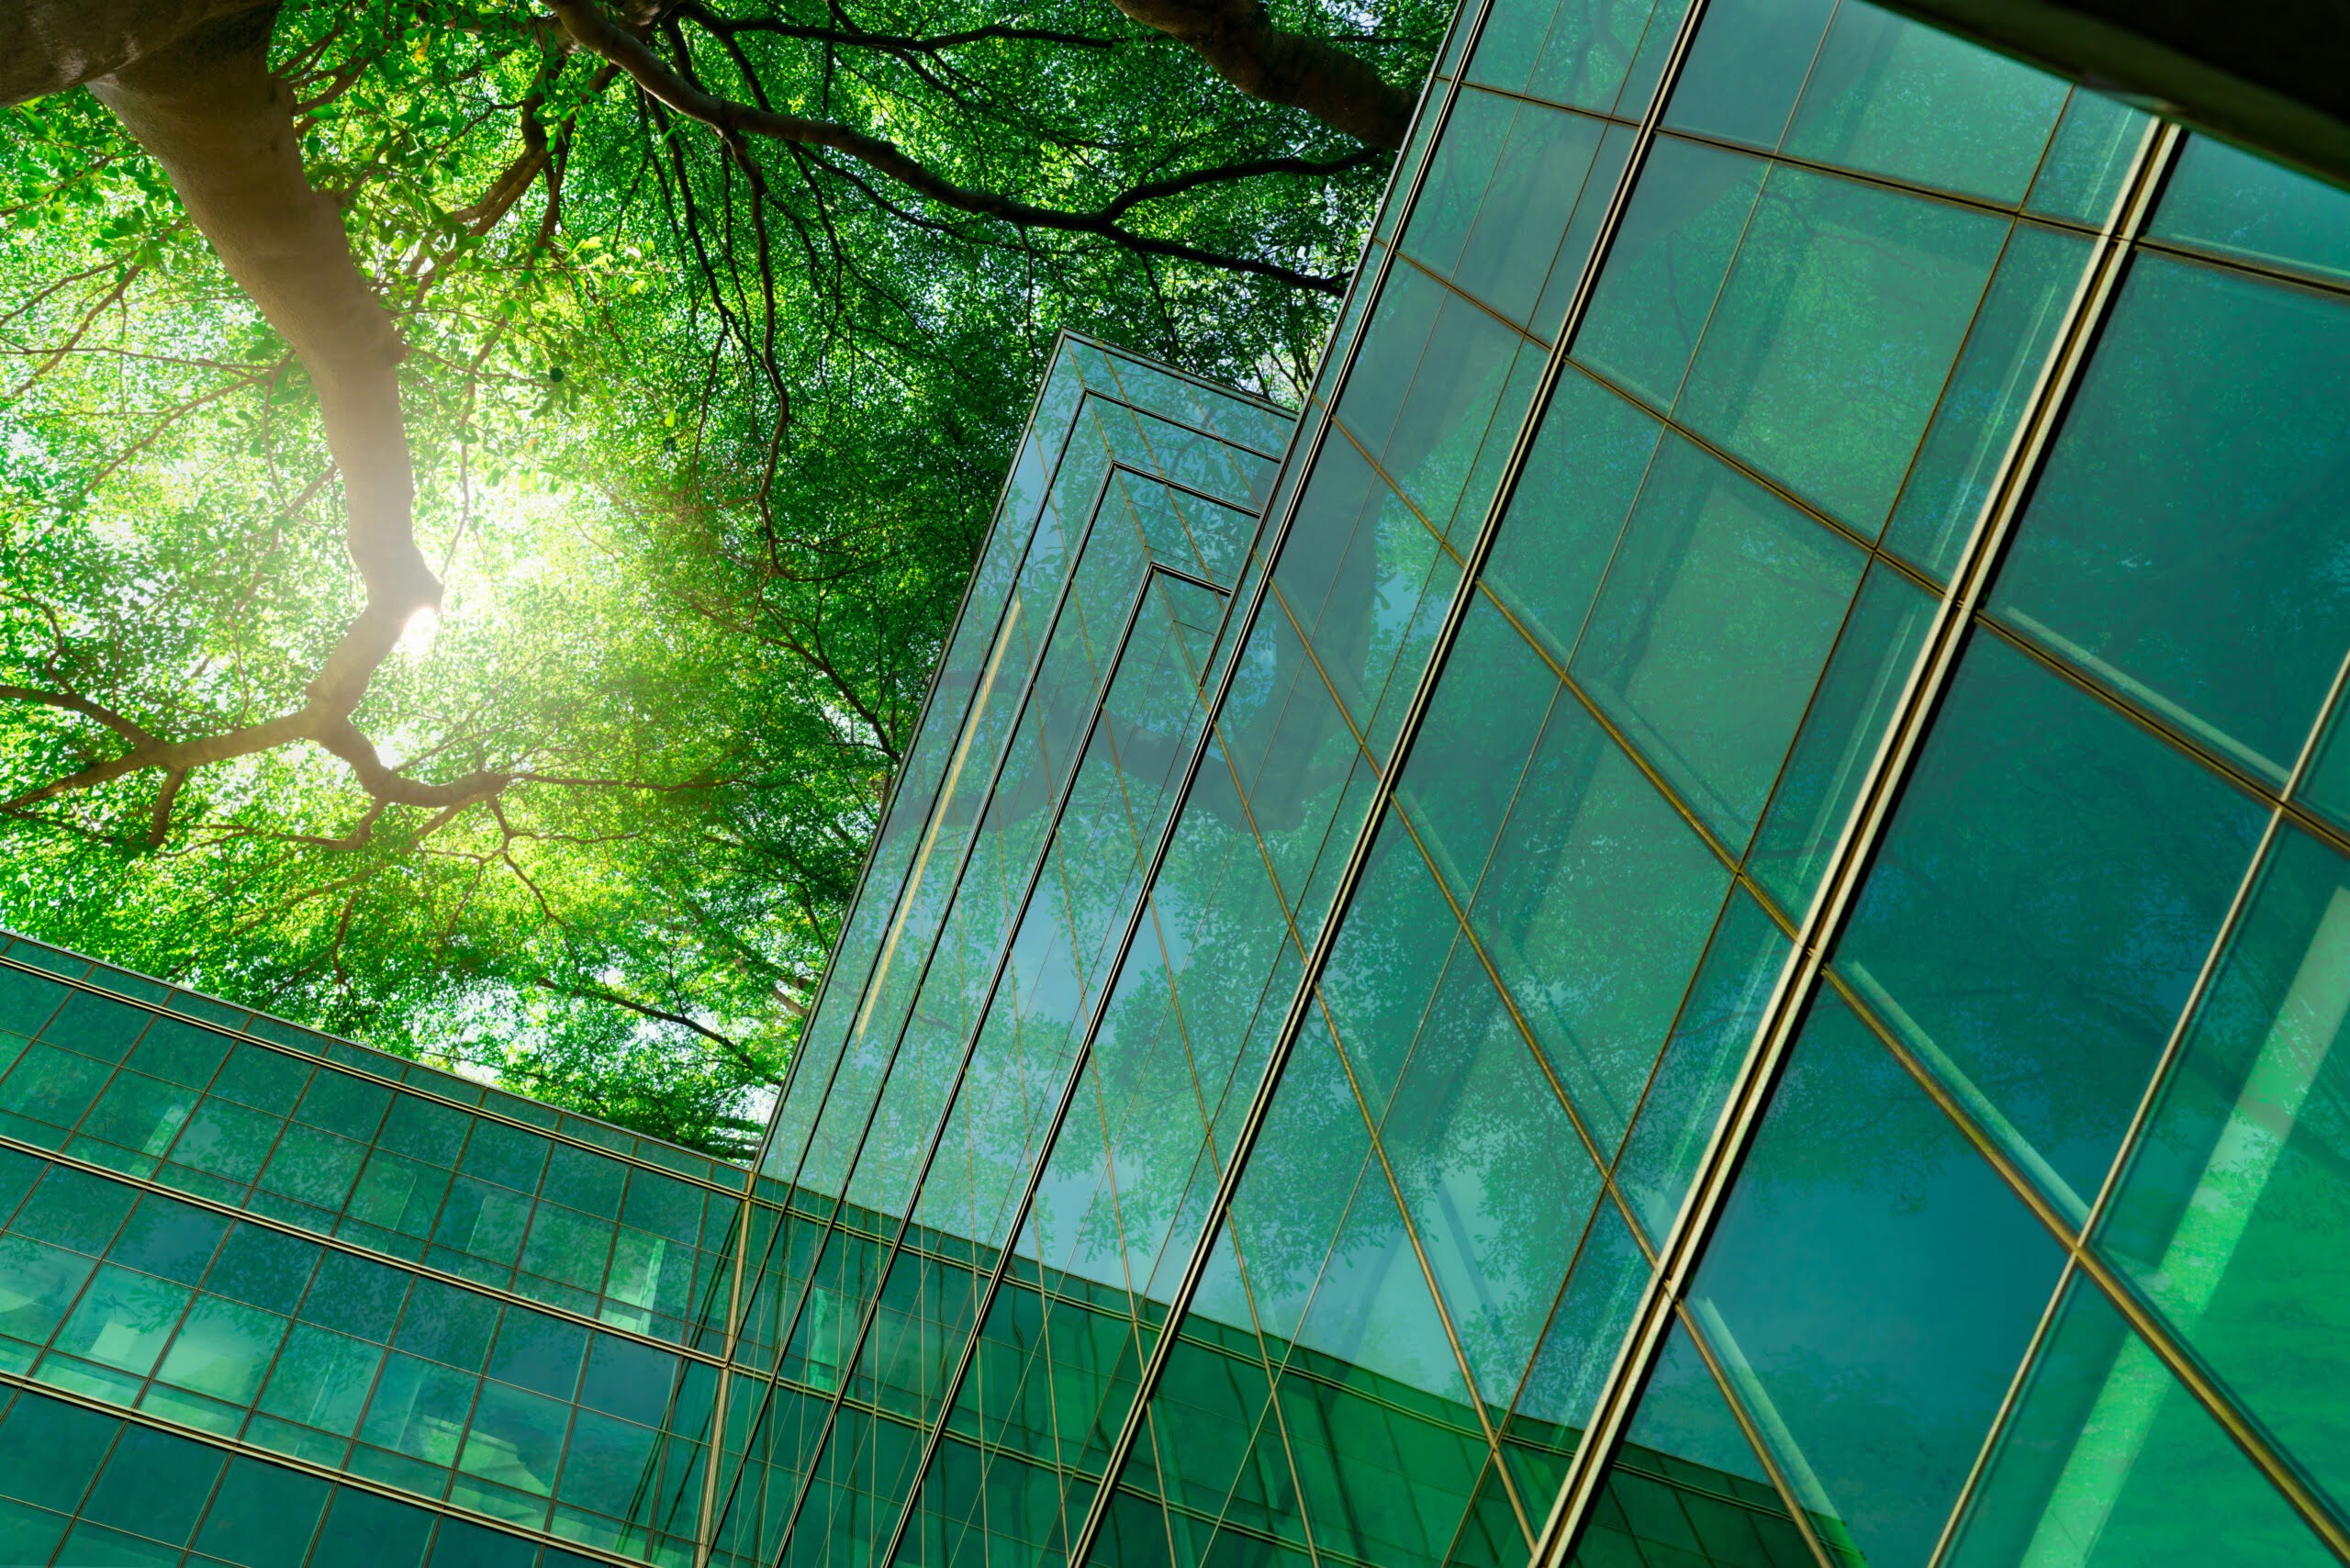 Greenery around modern building